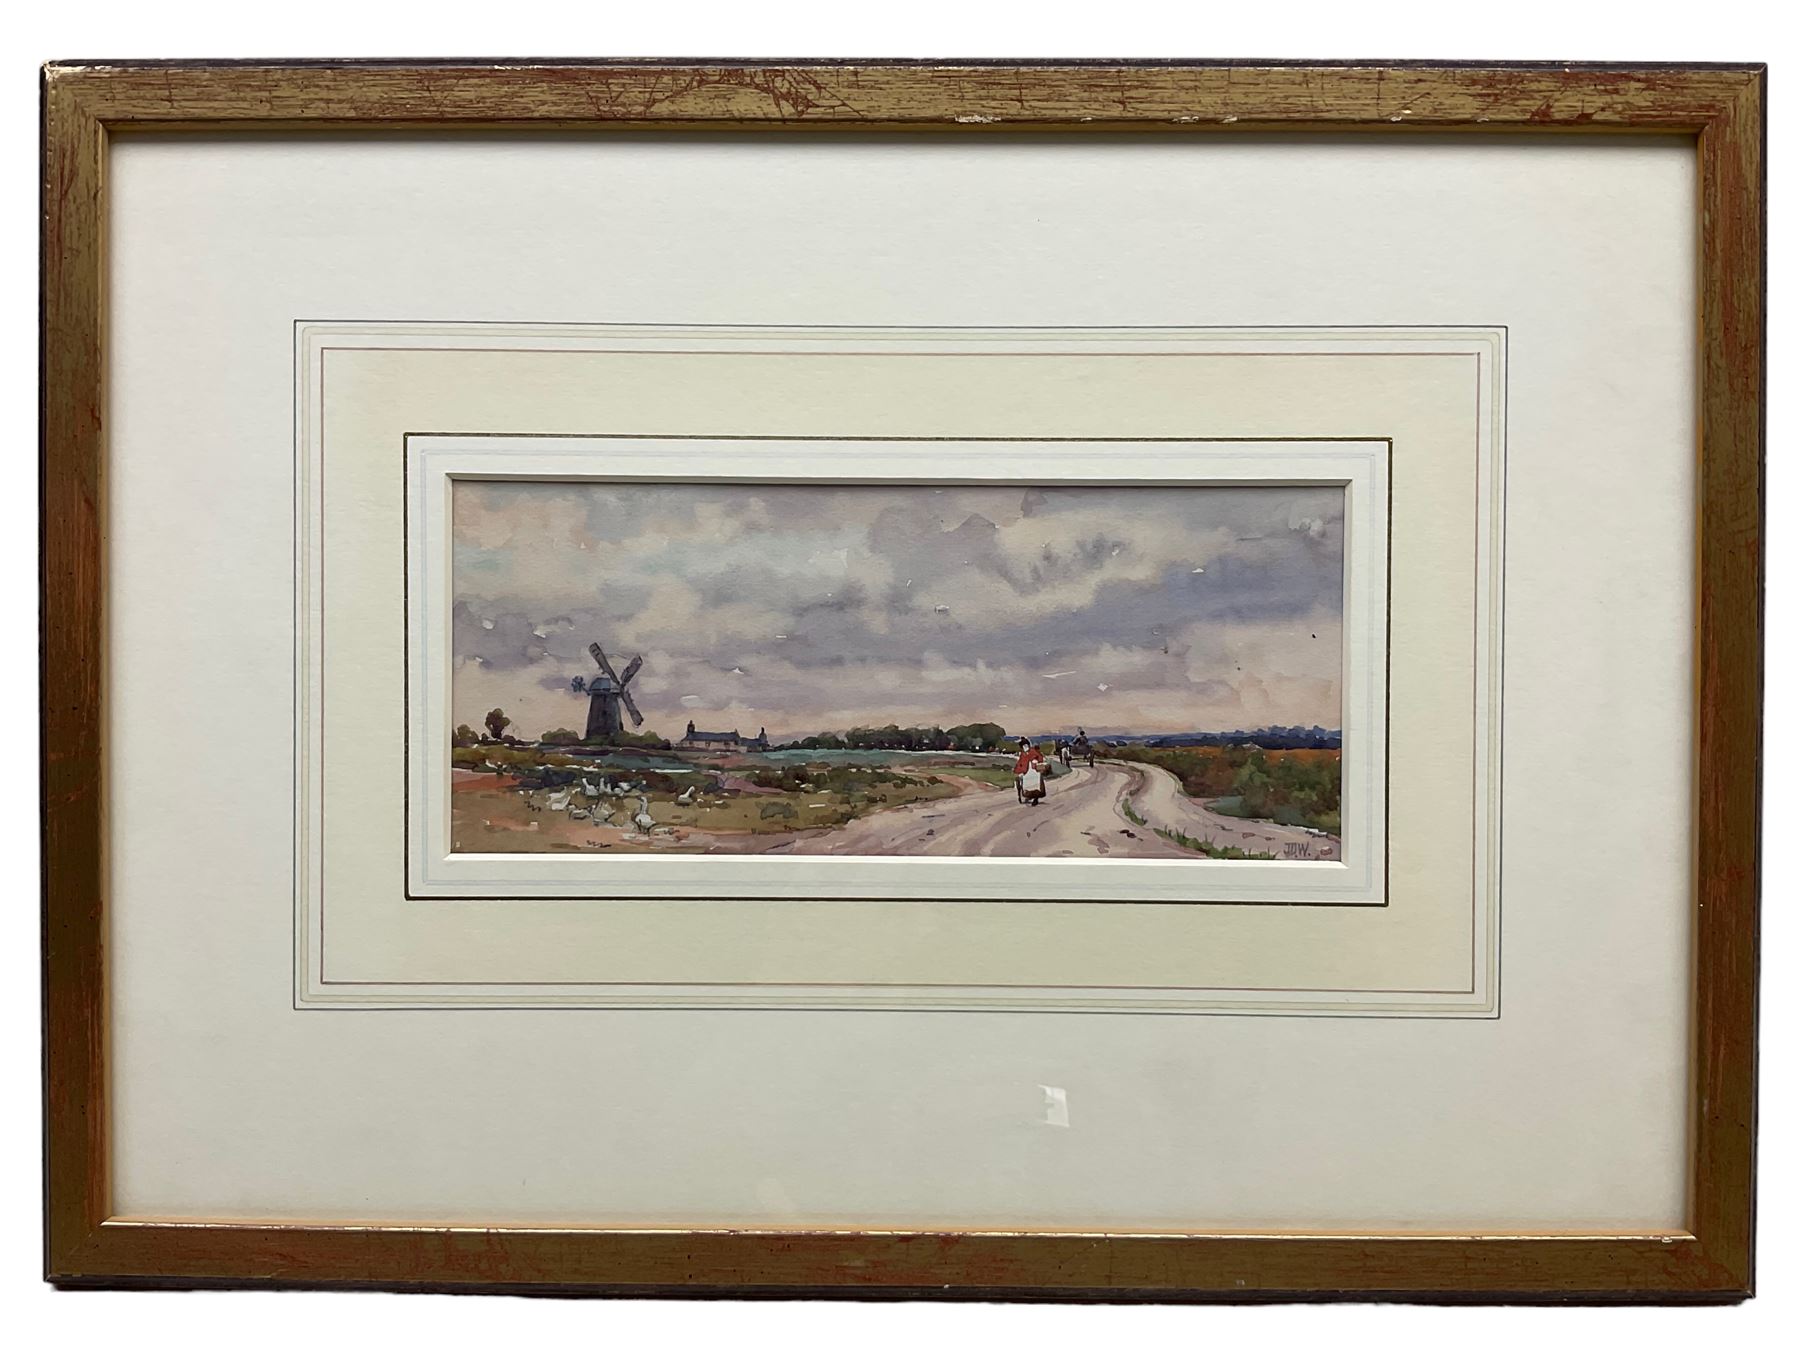 John Dobby Walker (British 1863-1925): 'Summer' Country Lane with Figures - Netherlands - Image 2 of 2